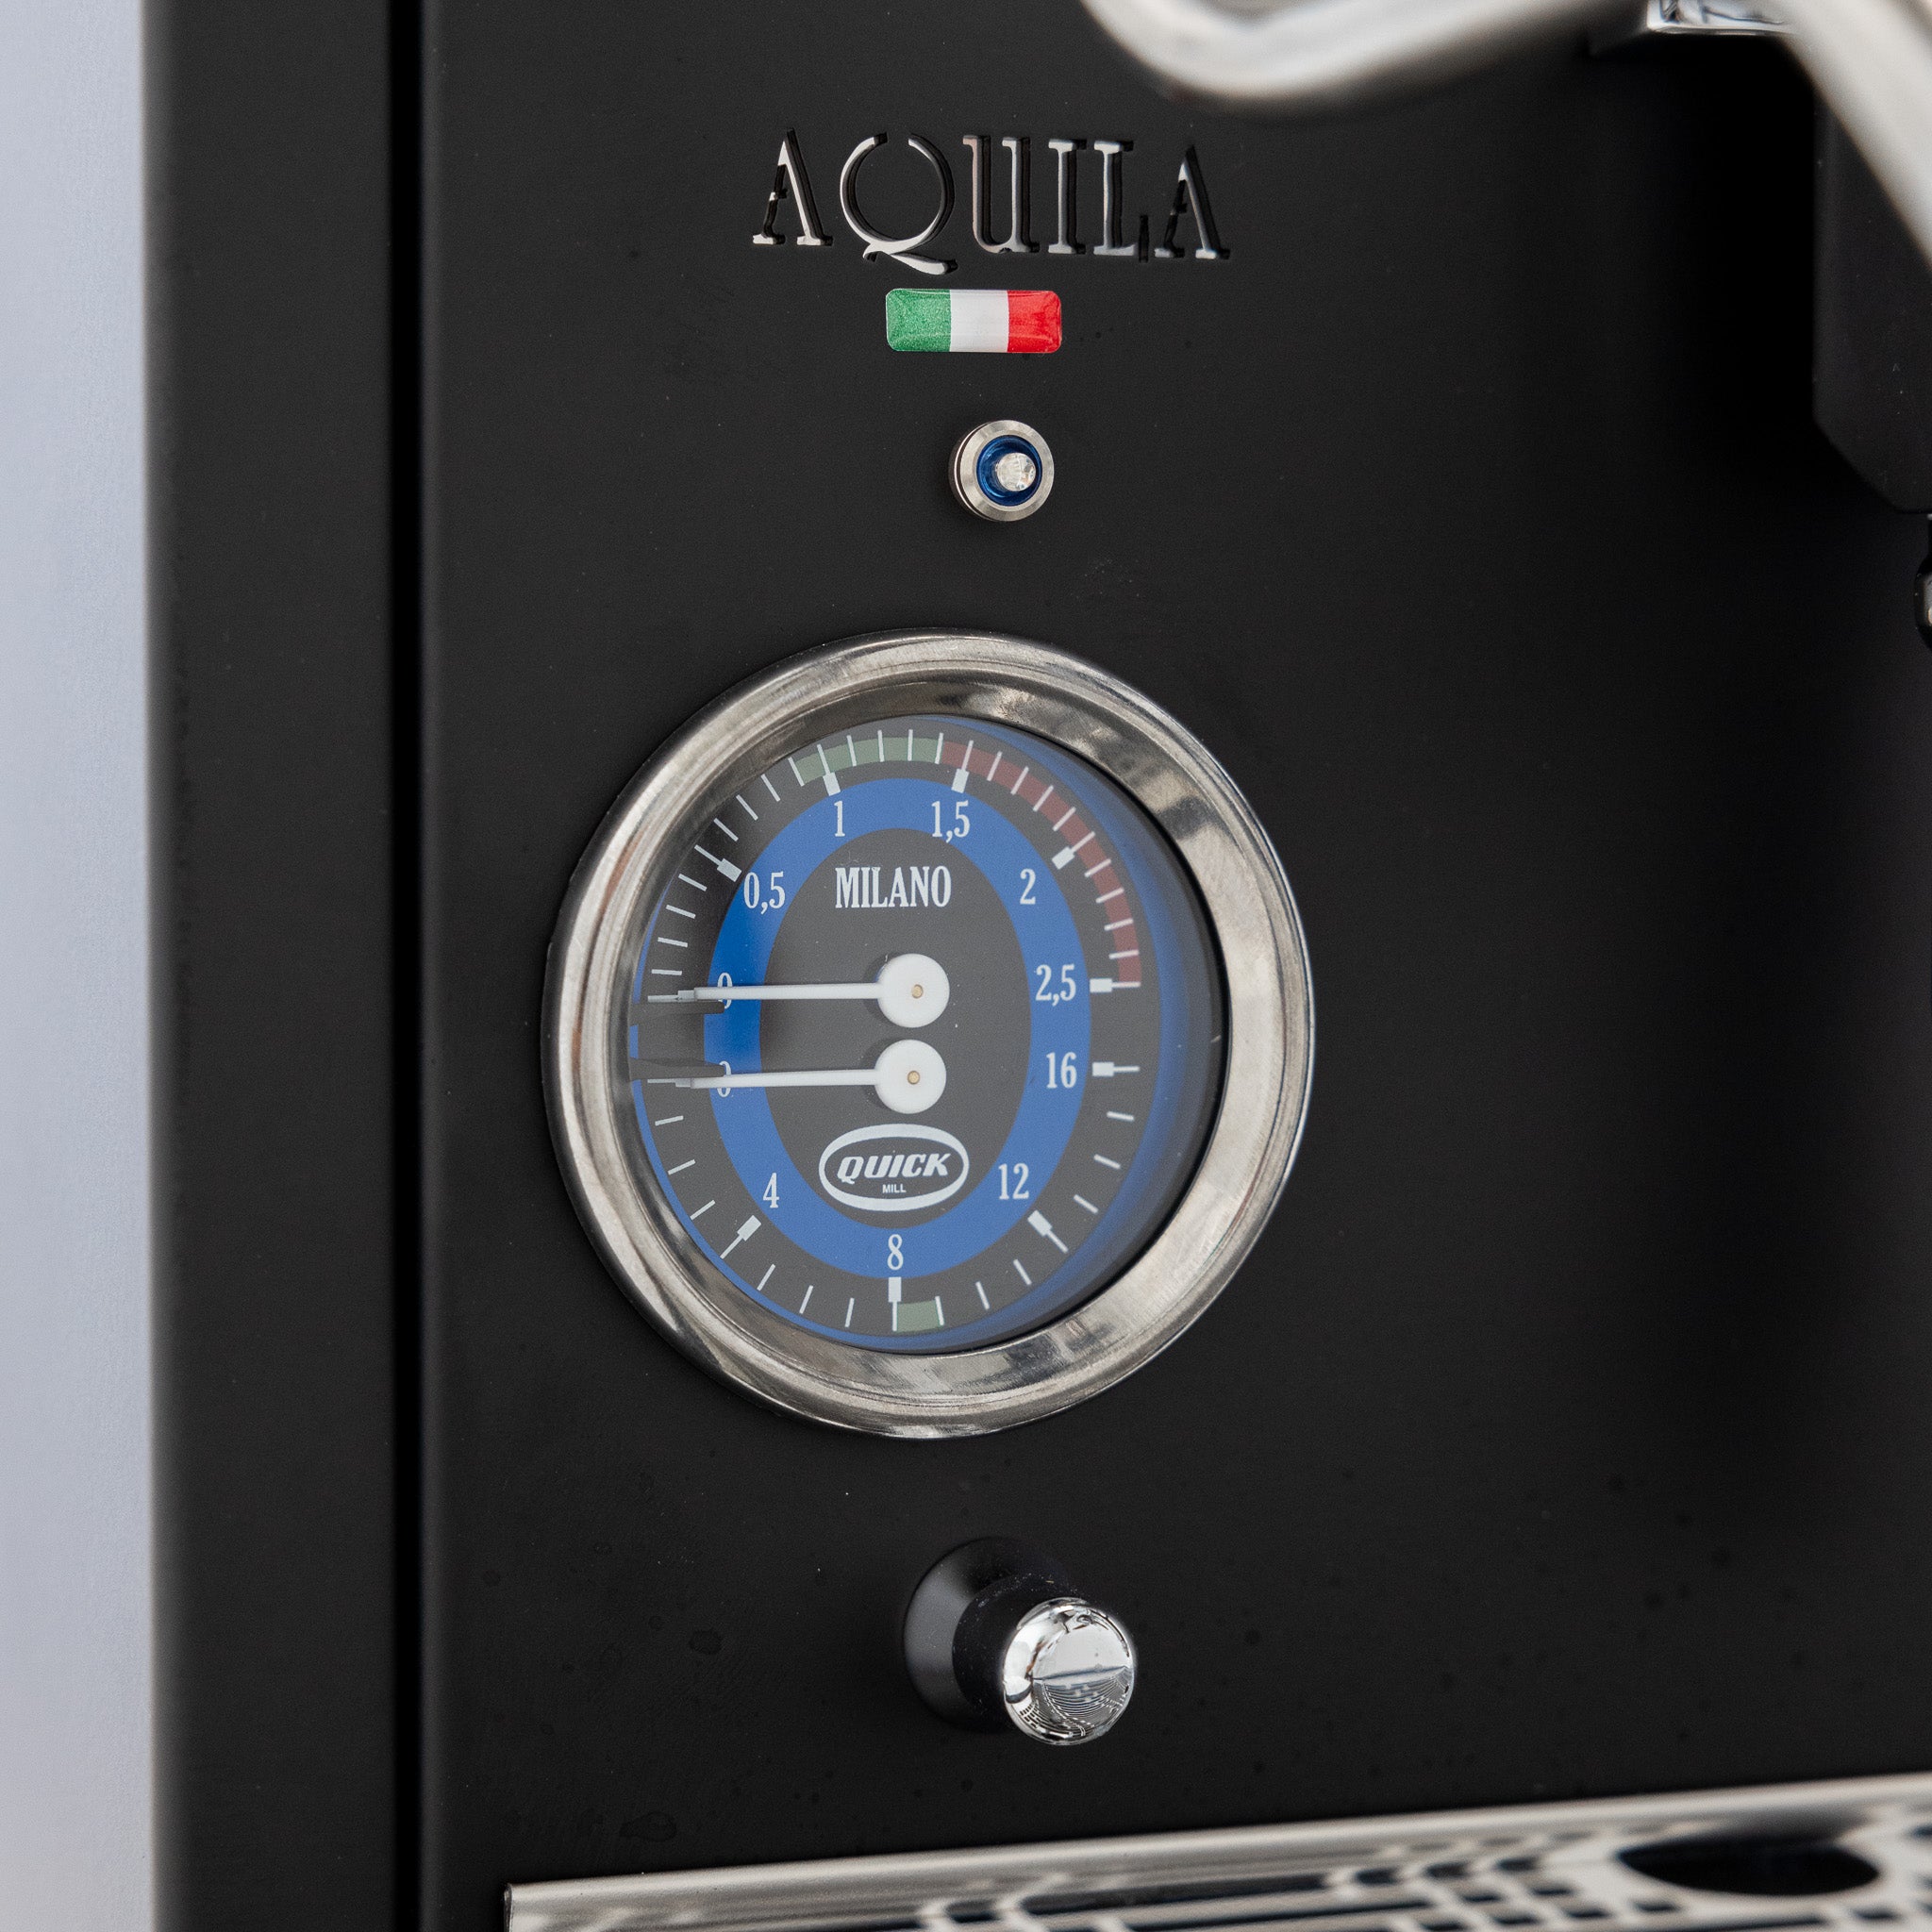 Quick Mill Aquila Profi Black Coffee Machine